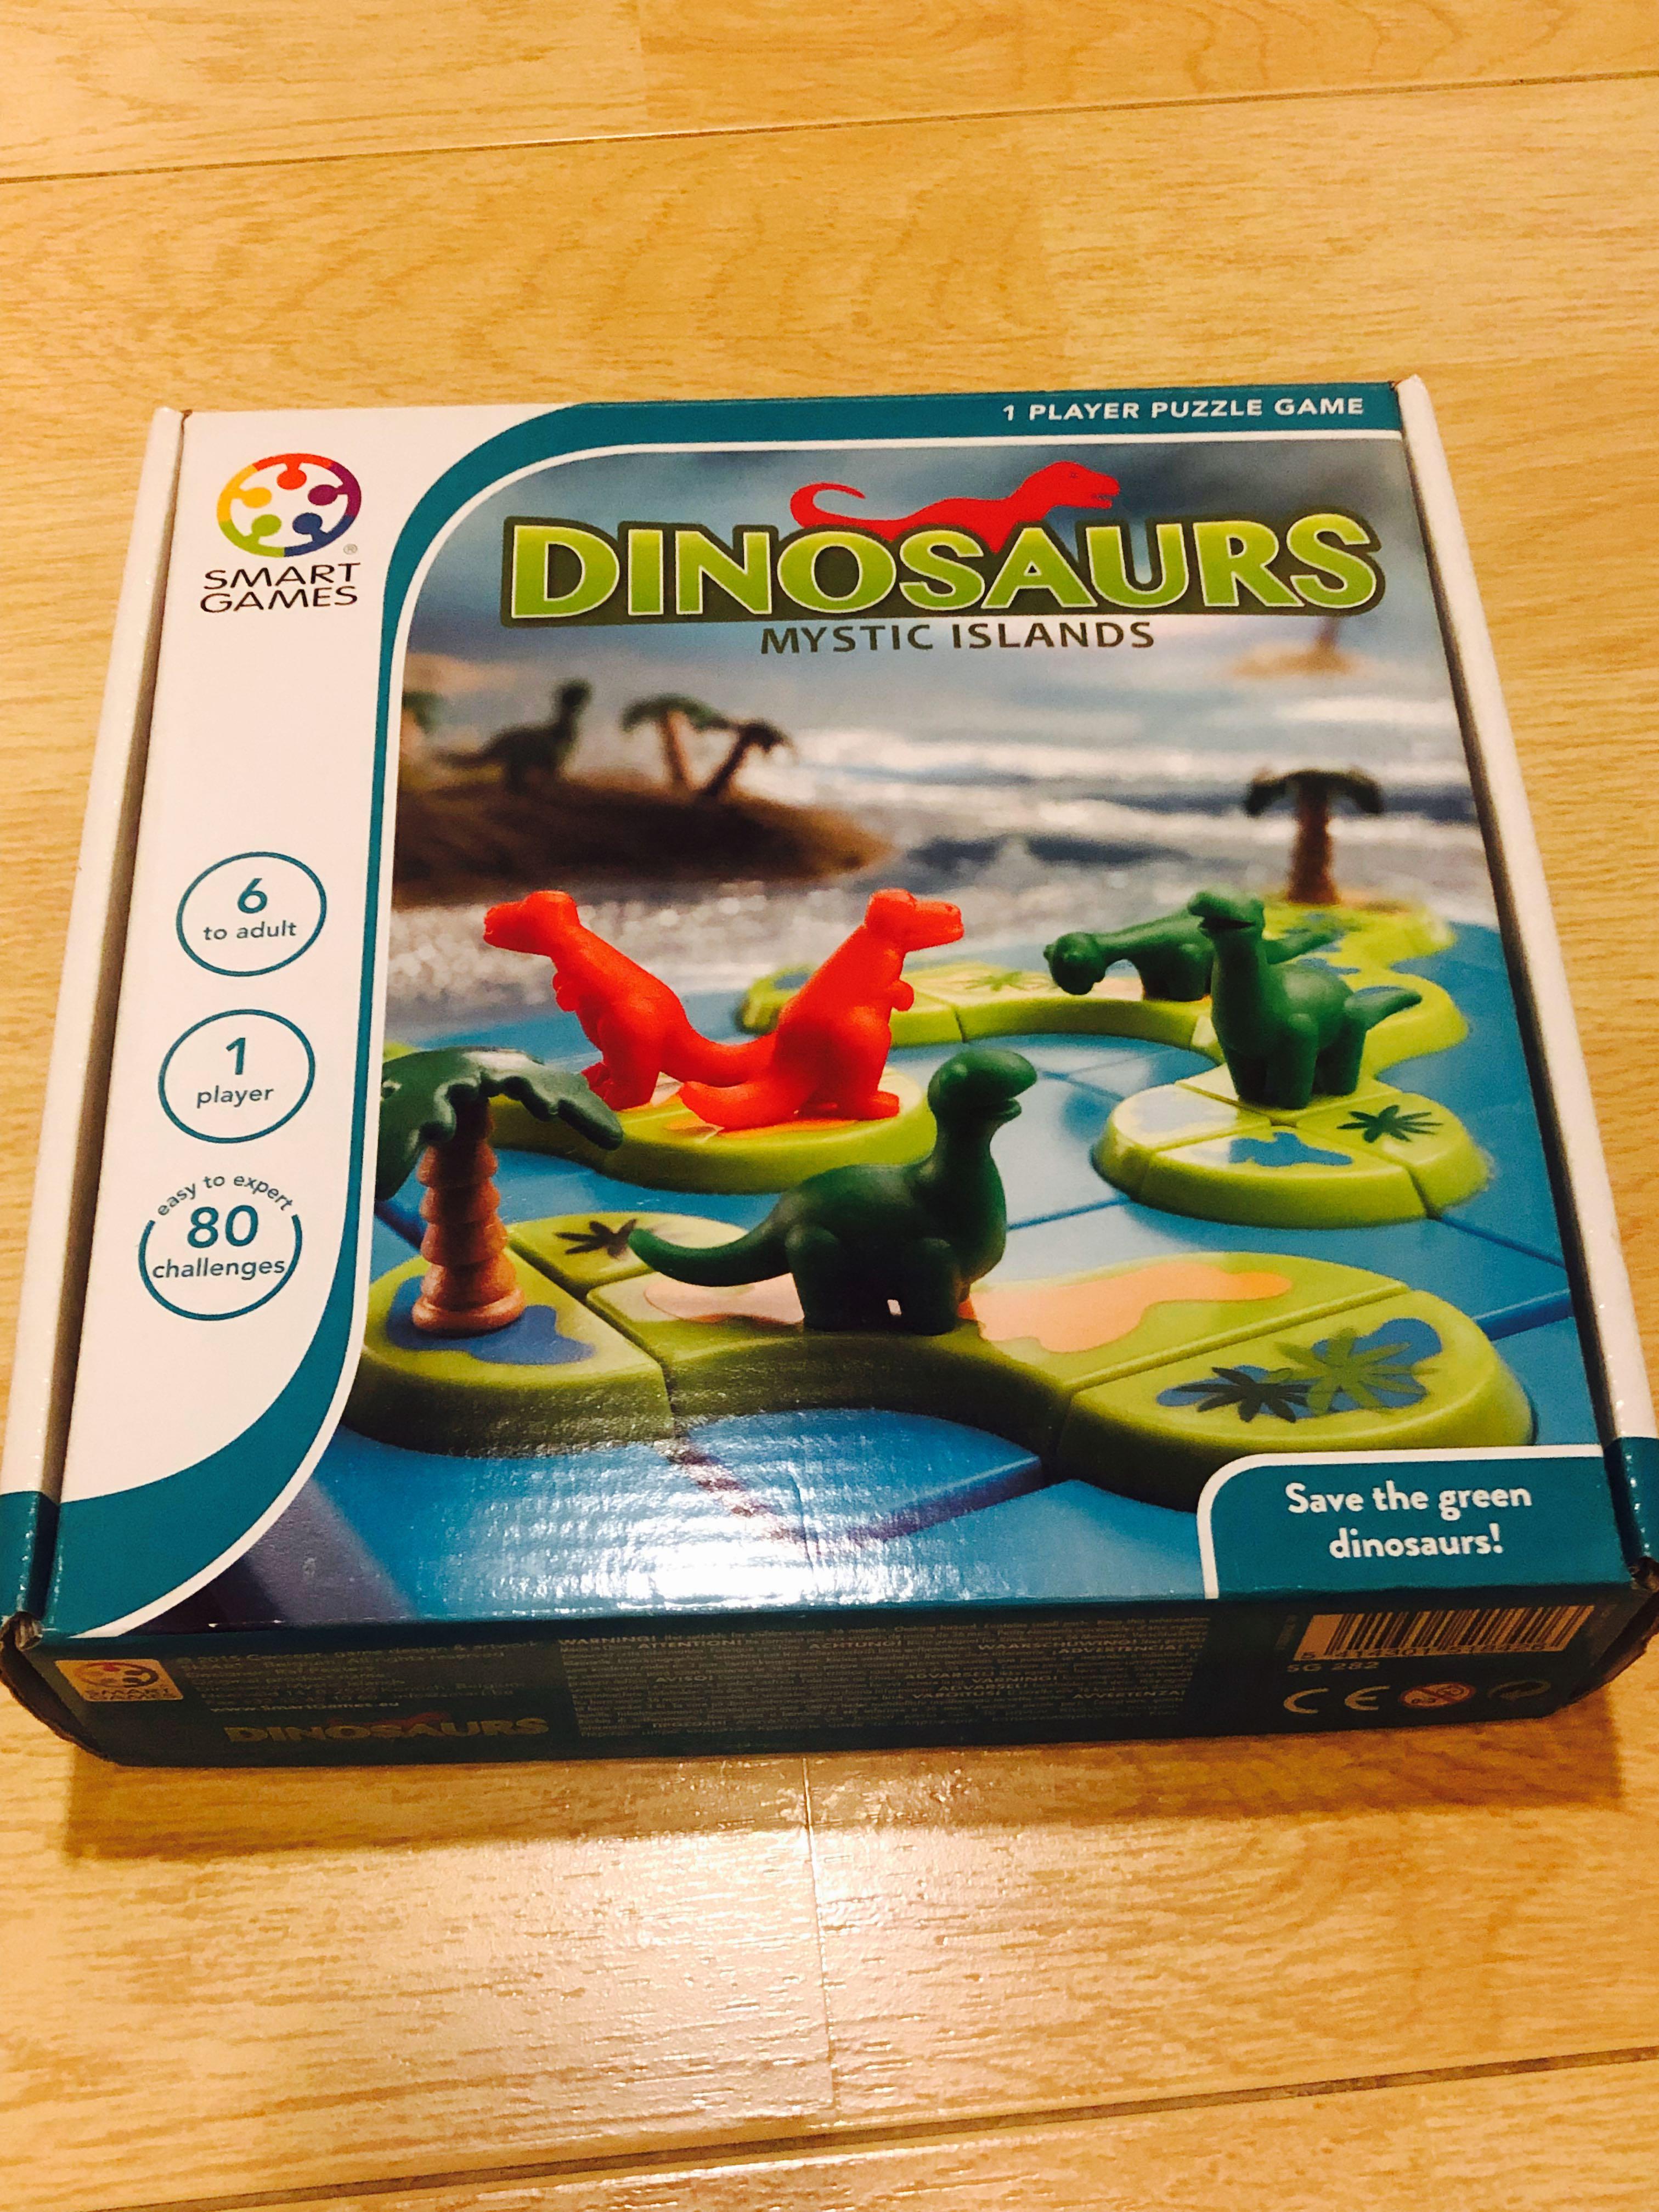 Dinosaurs Mystic Islands Smart Games